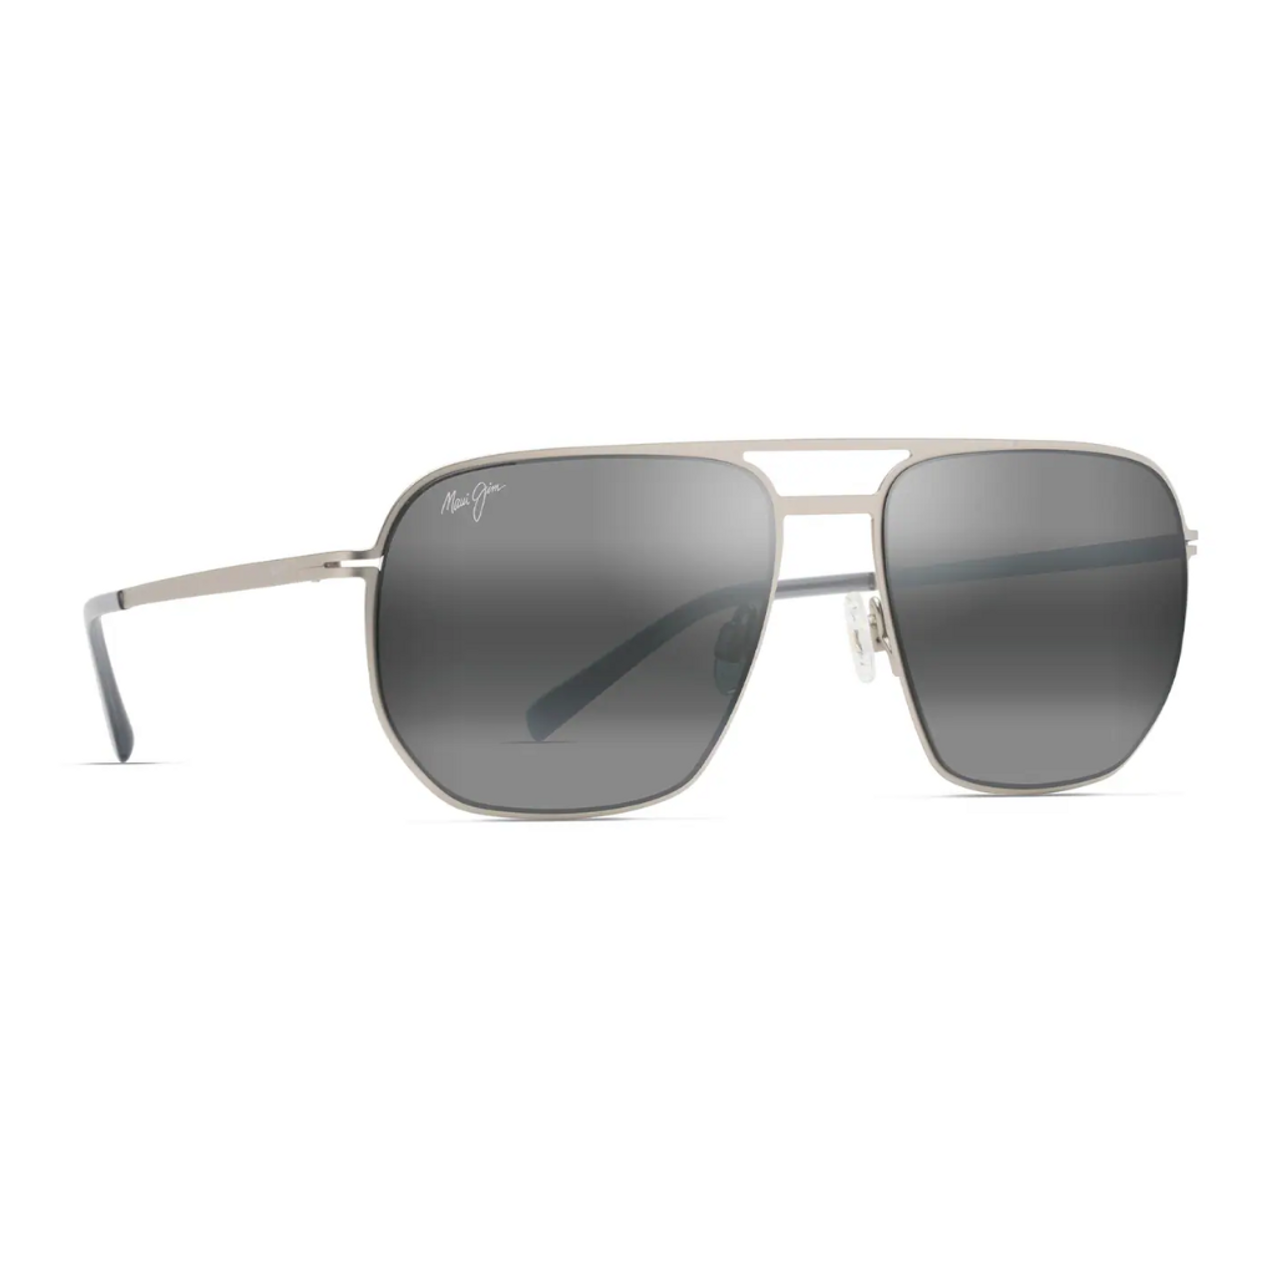 SHARK'S COVE Polarized Aviator Sunglasses